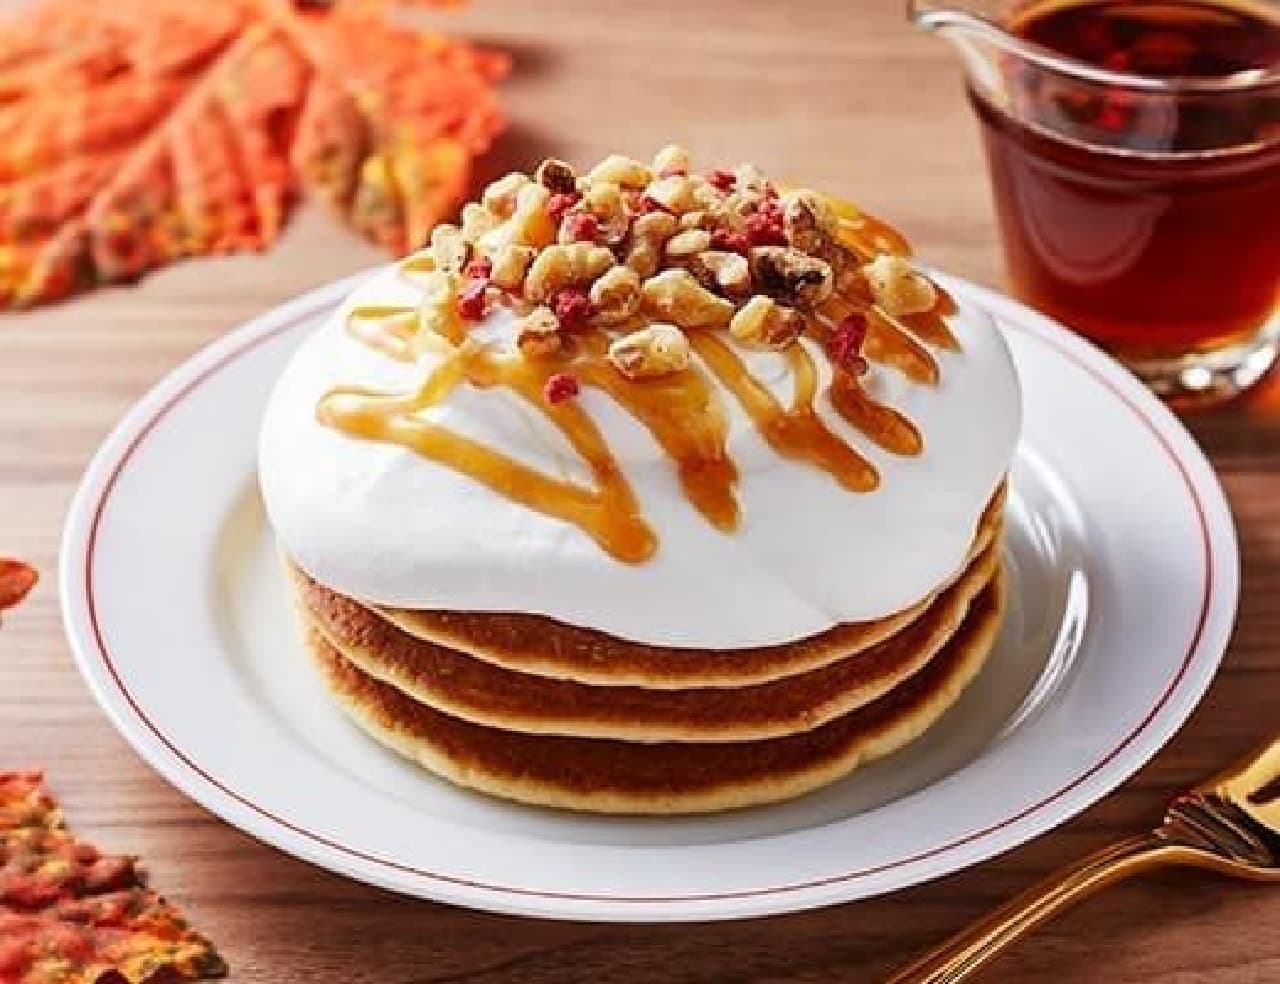 Lawson "Maple Cream Pancakes"